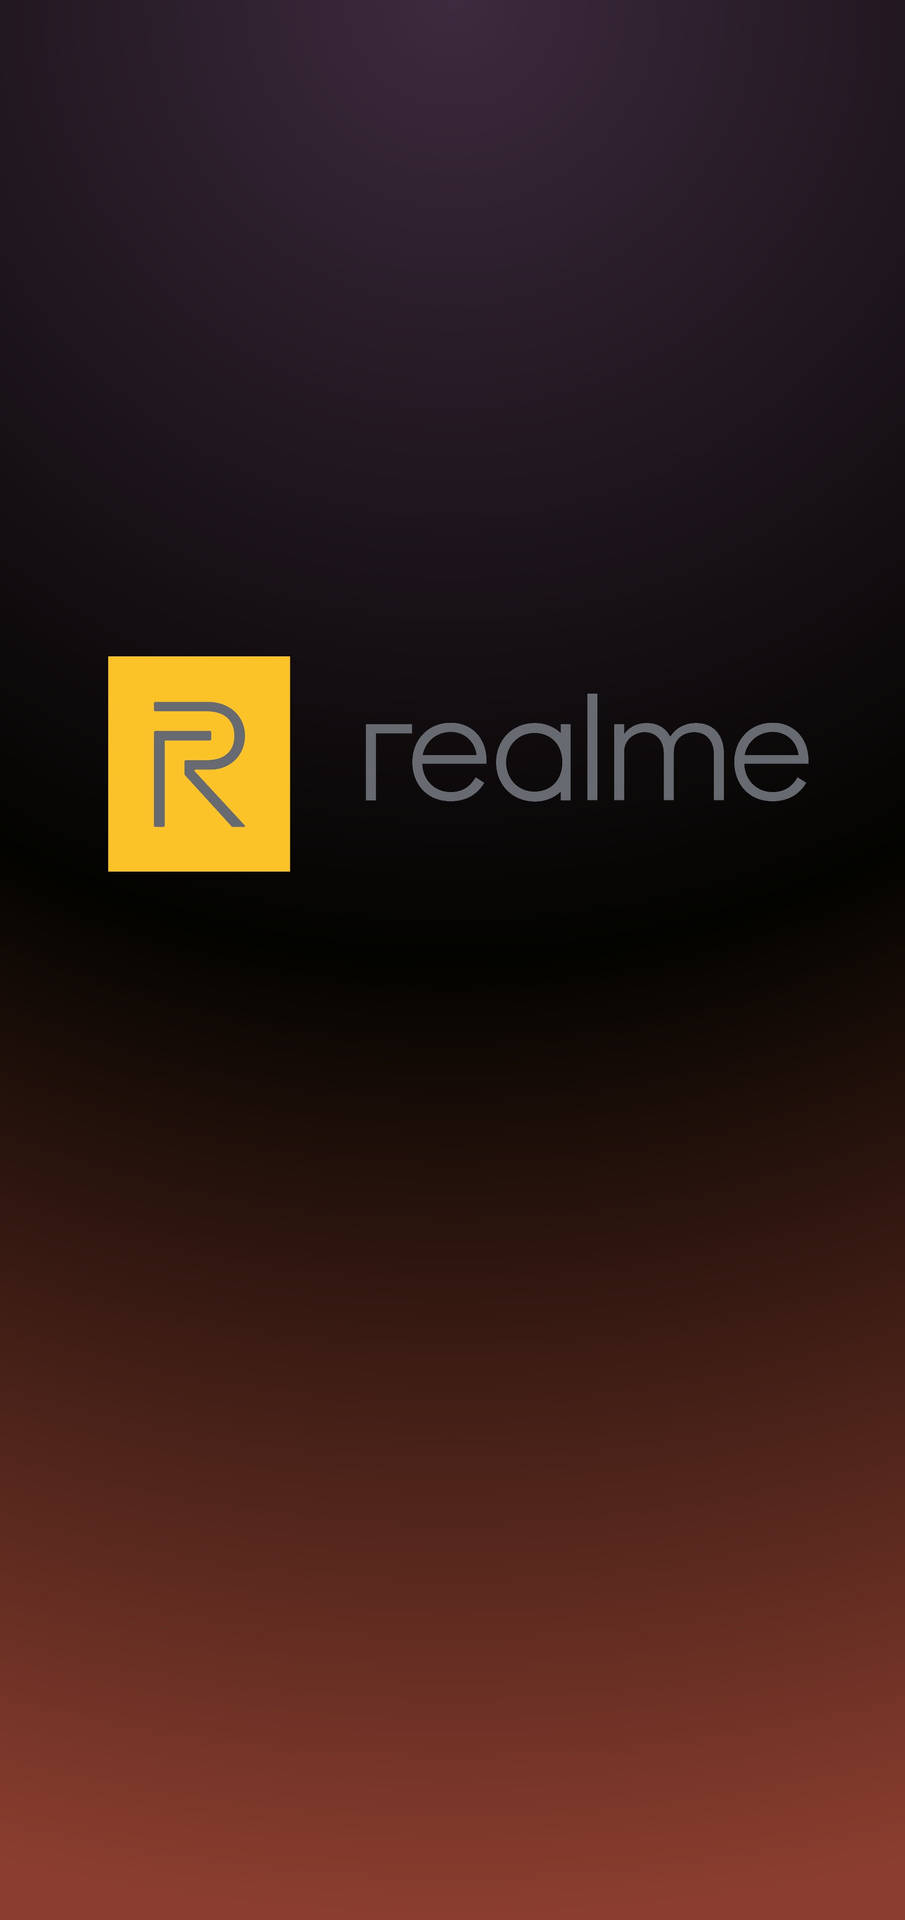 Realme Logo Black Brown Gradient Wallpaper